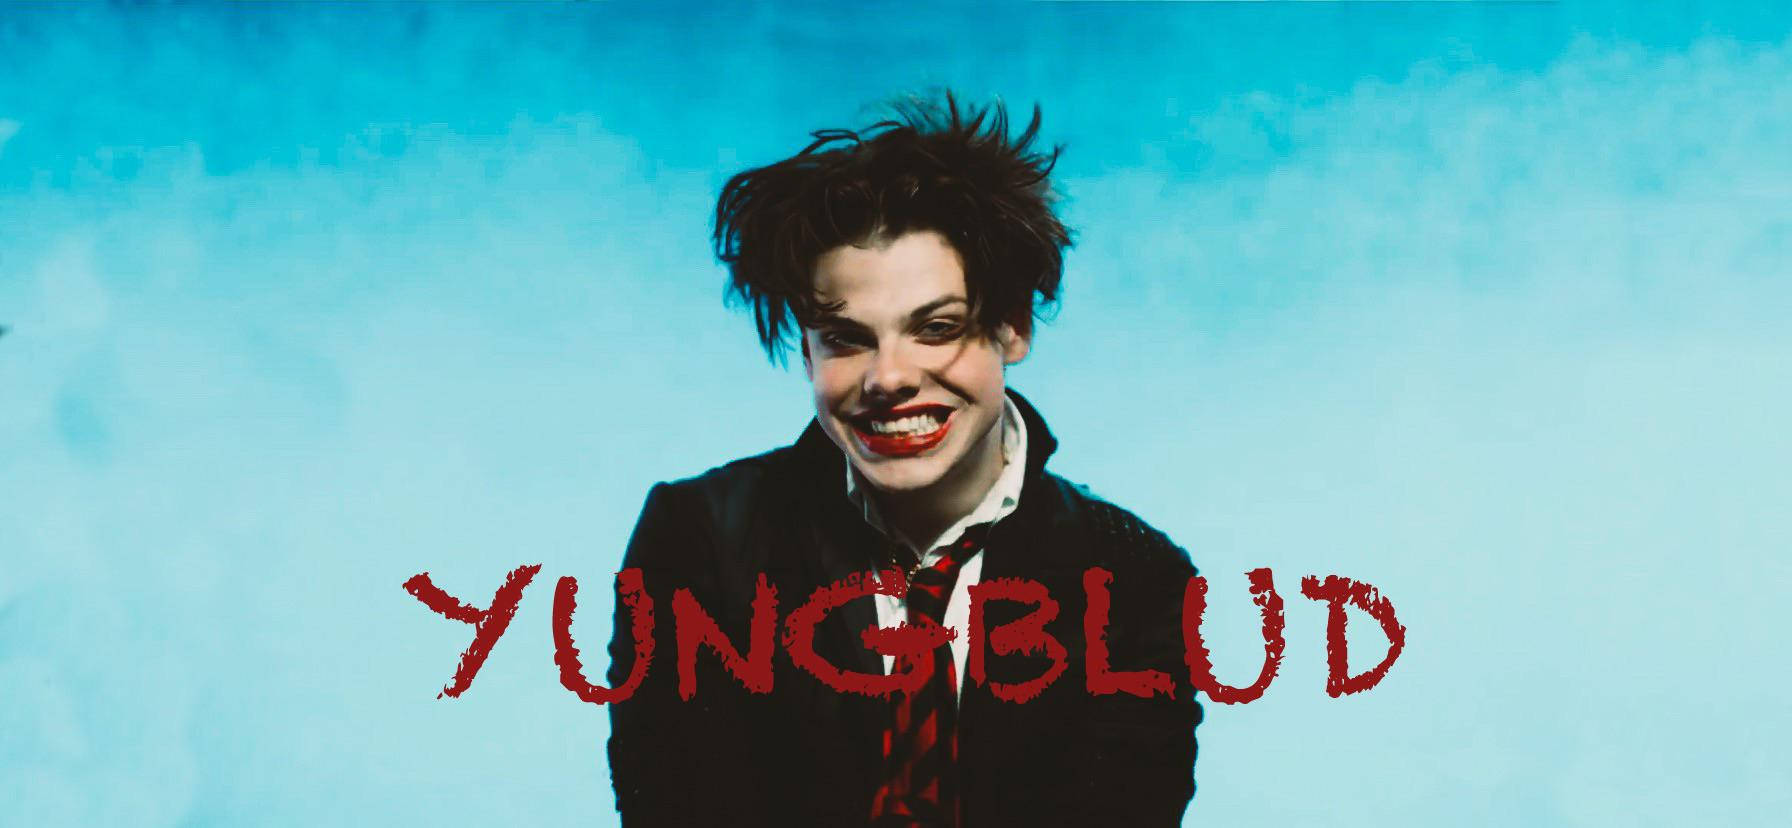 Yungblud Psychotic Kids Music Video Wallpaper